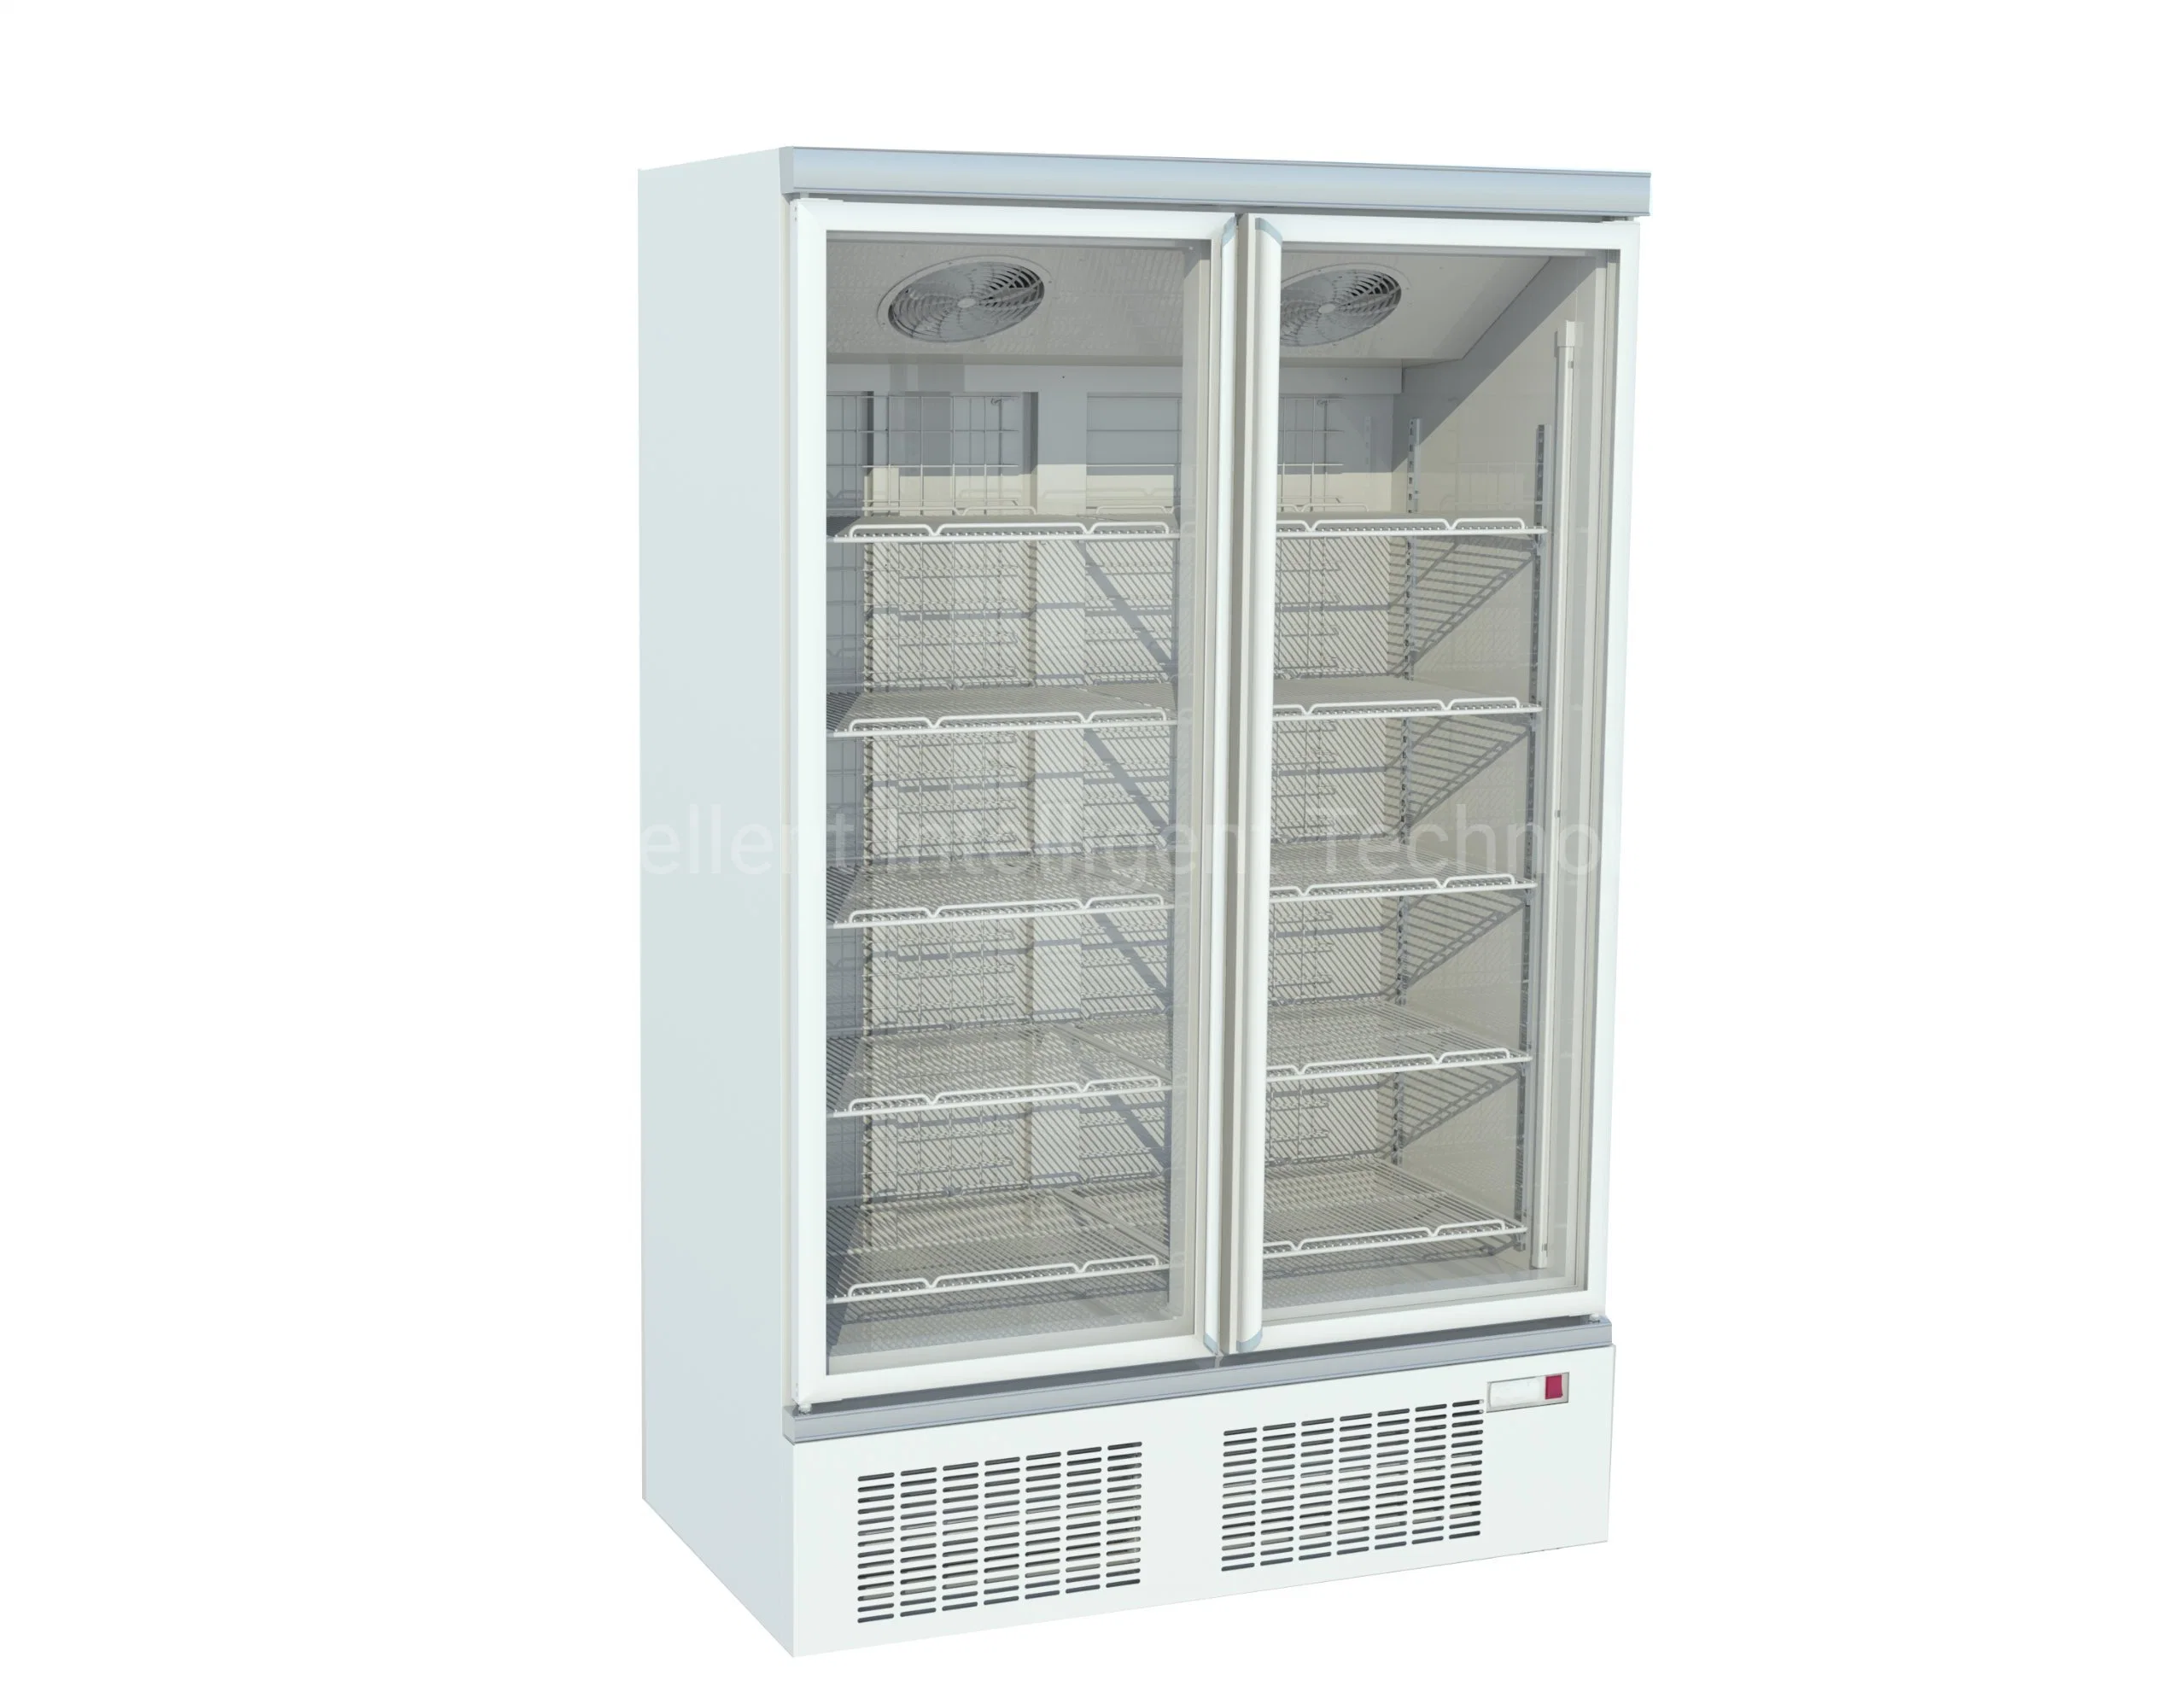 Supermarket Commercial Glass Door Upright Fridge Beverage Display Cooler Showcase Refrigerator